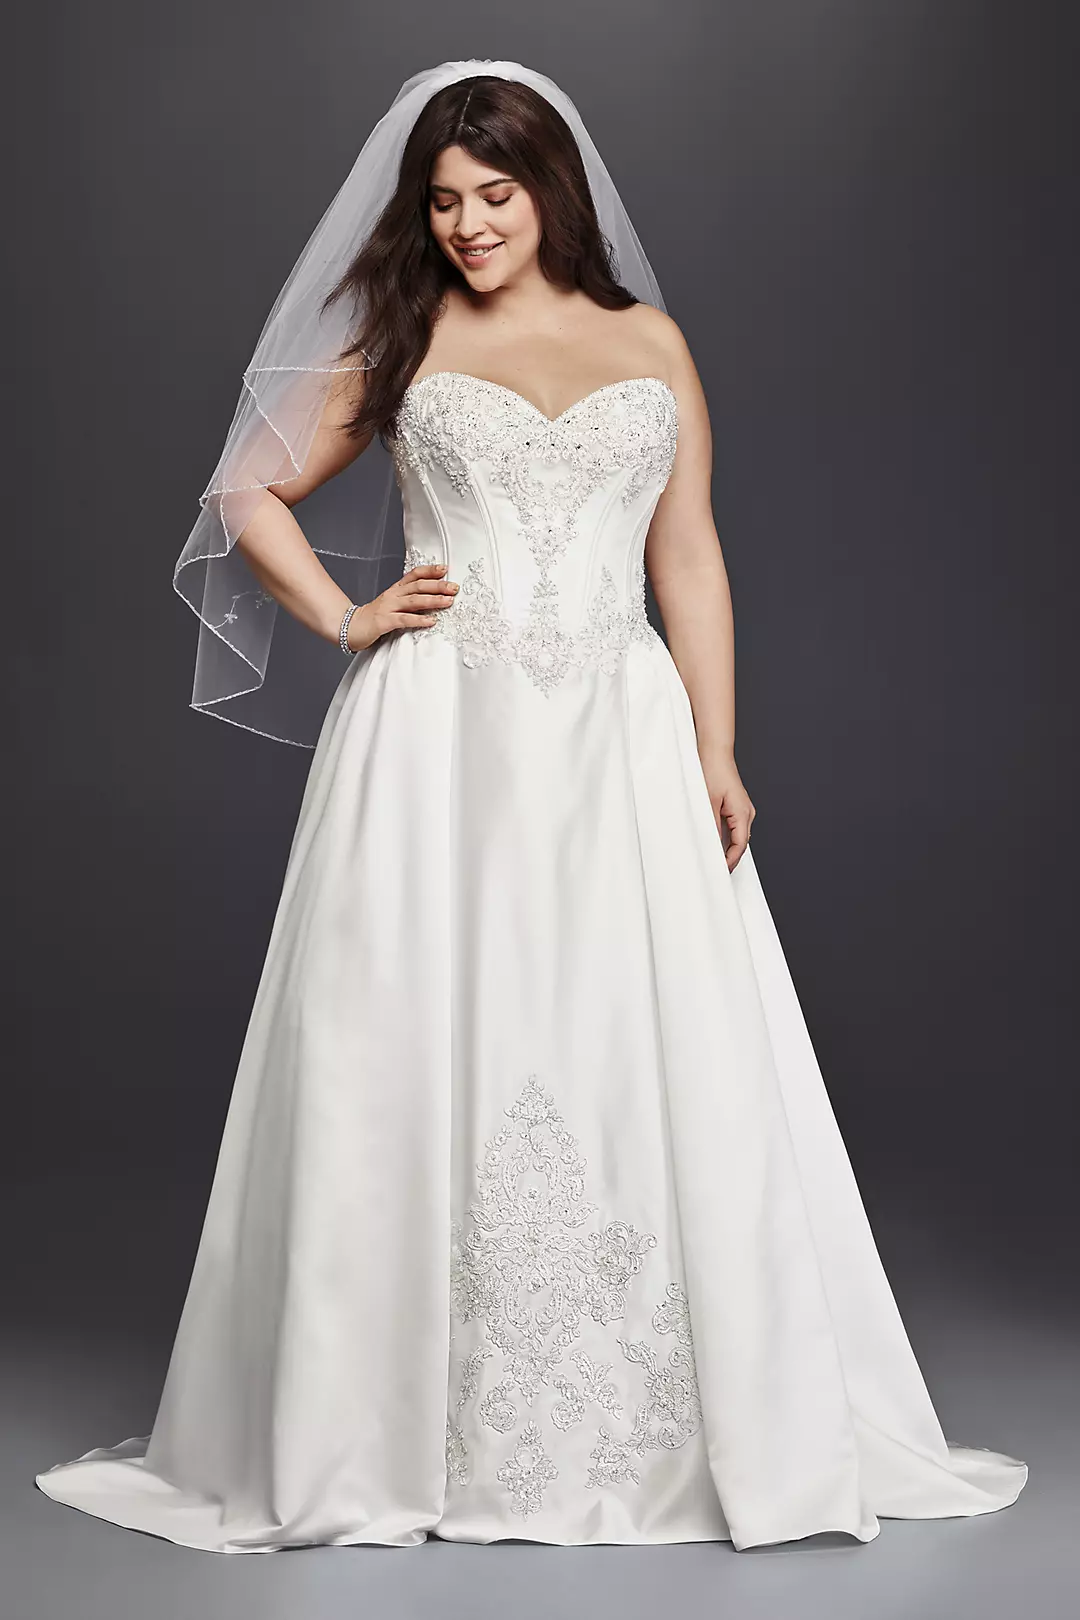 Strapless Satin Plus Size Ball Gown Wedding Dress Image